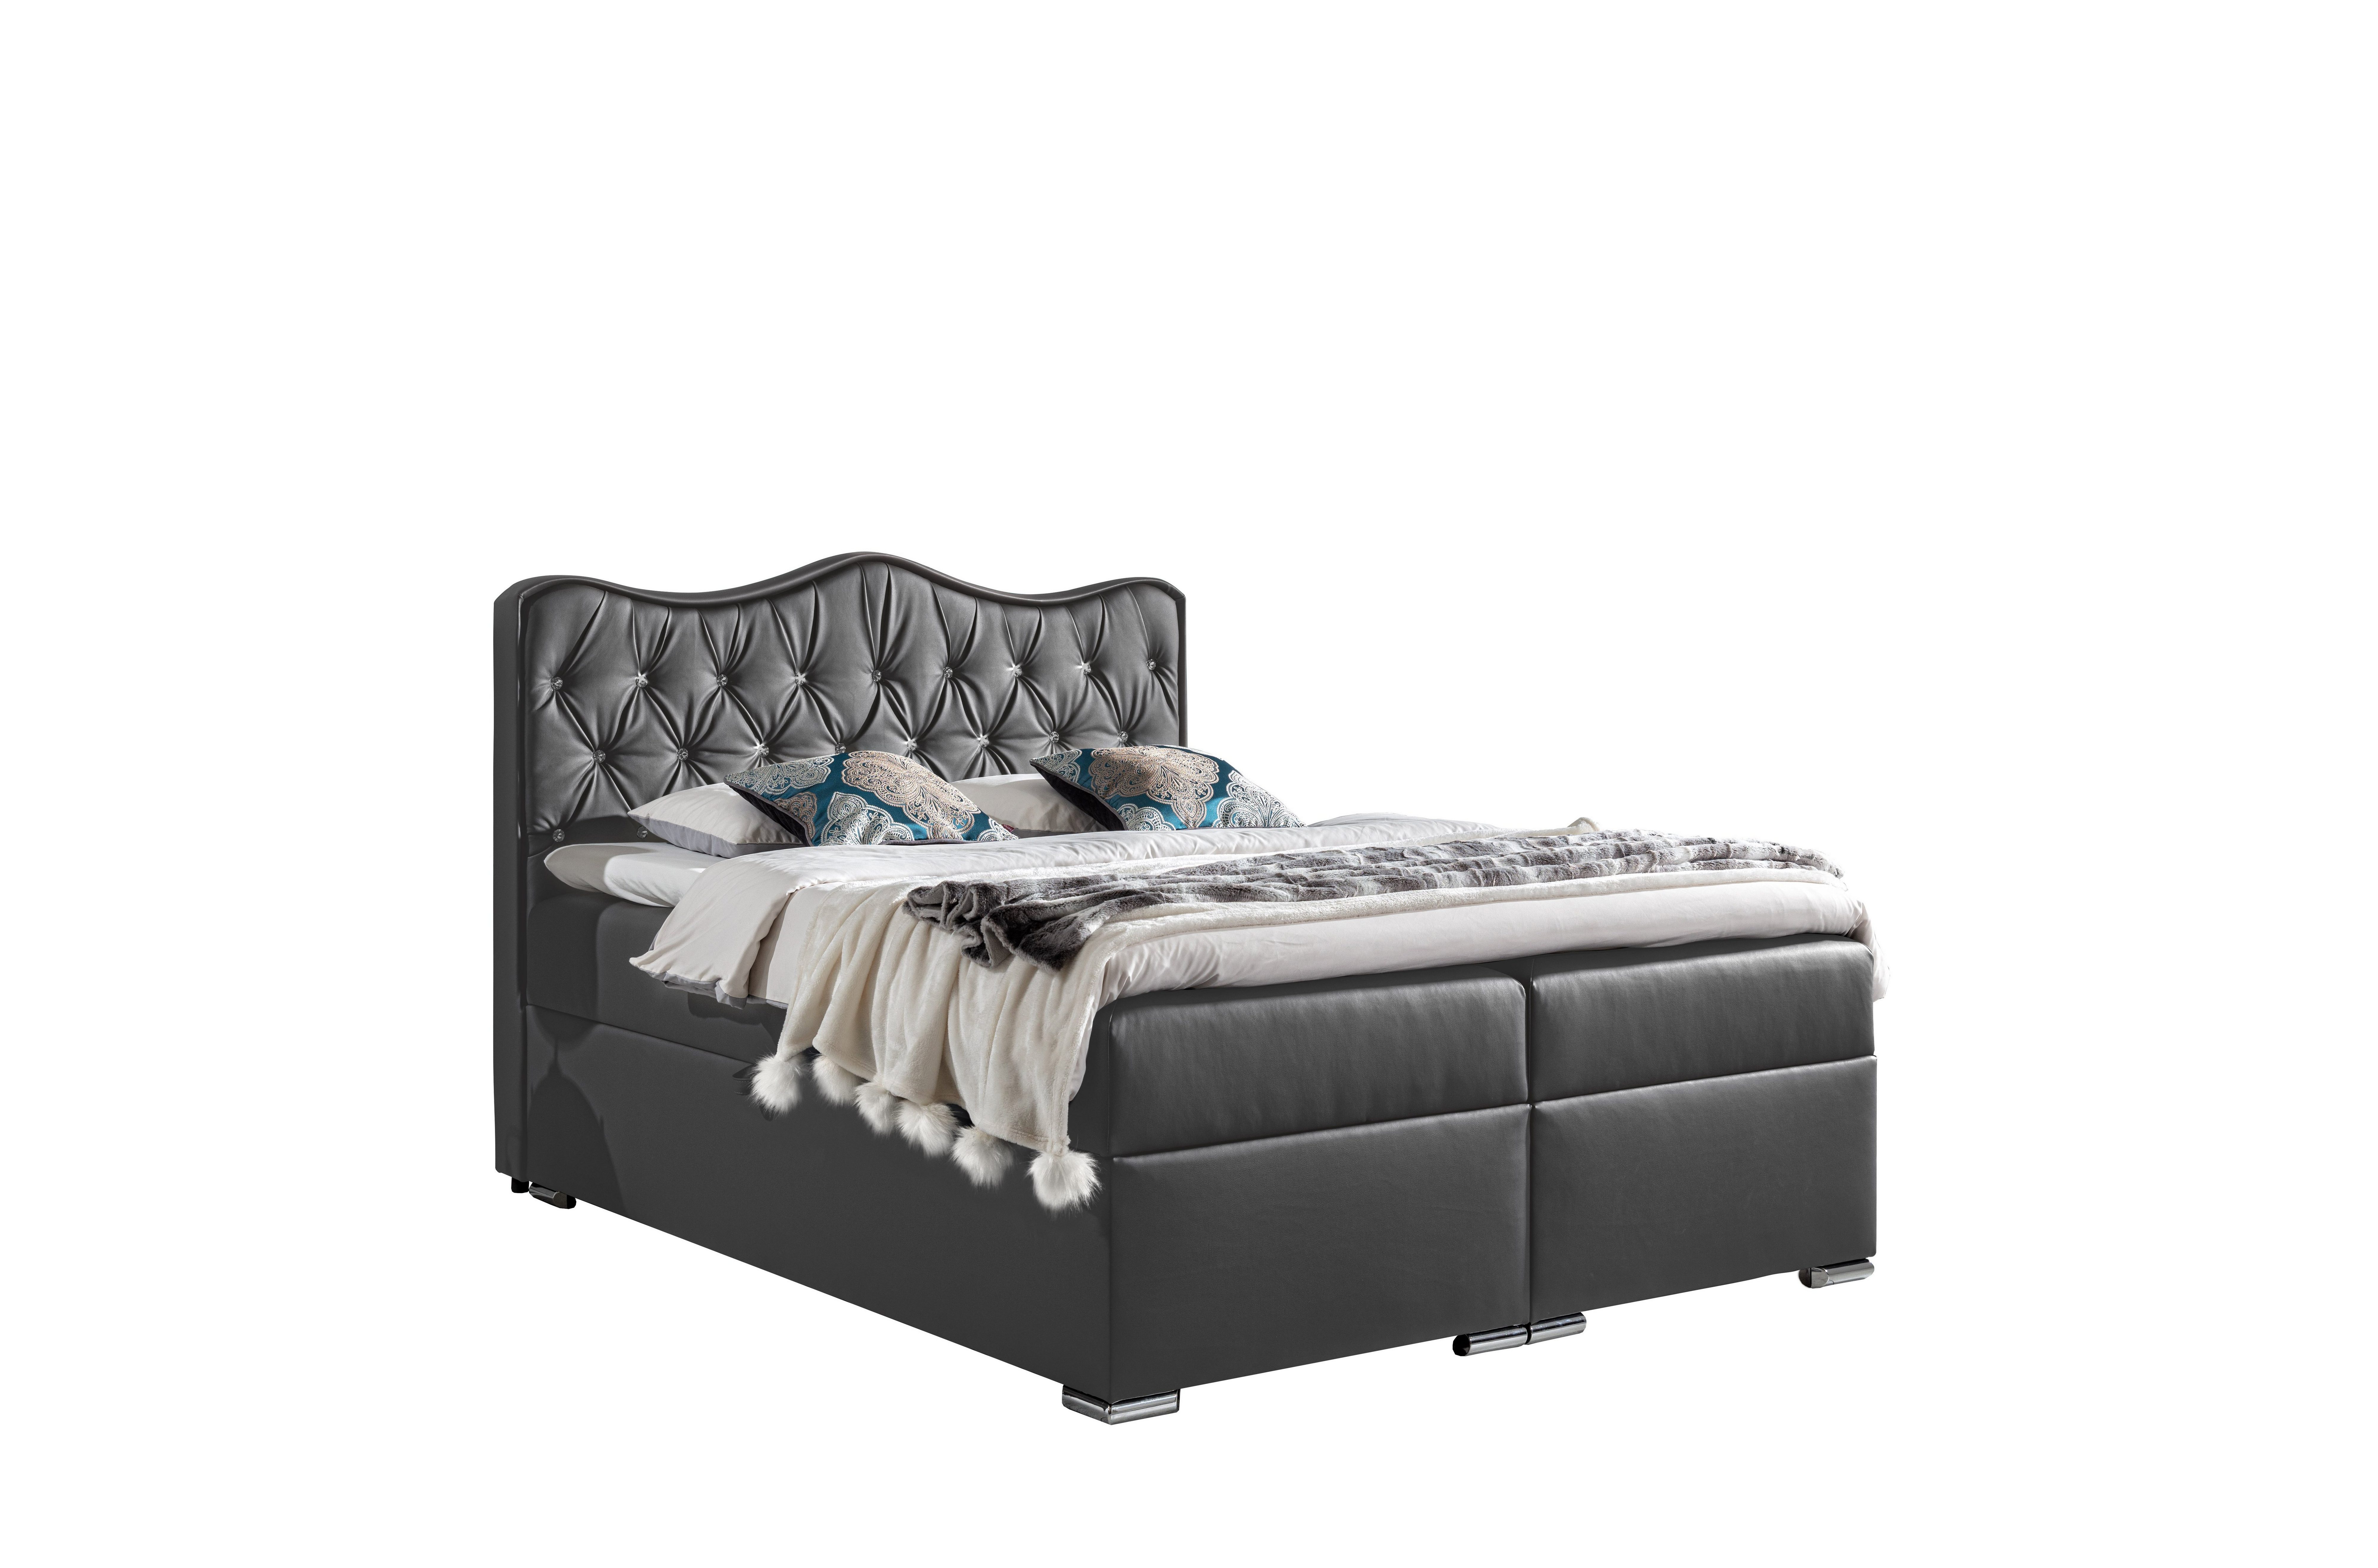 Furnix Boxspringbett TANSEL 120x200 und Ökoleder, veganes hochwertiges Grau PU-Leder Topper Bettkasten Bett mit